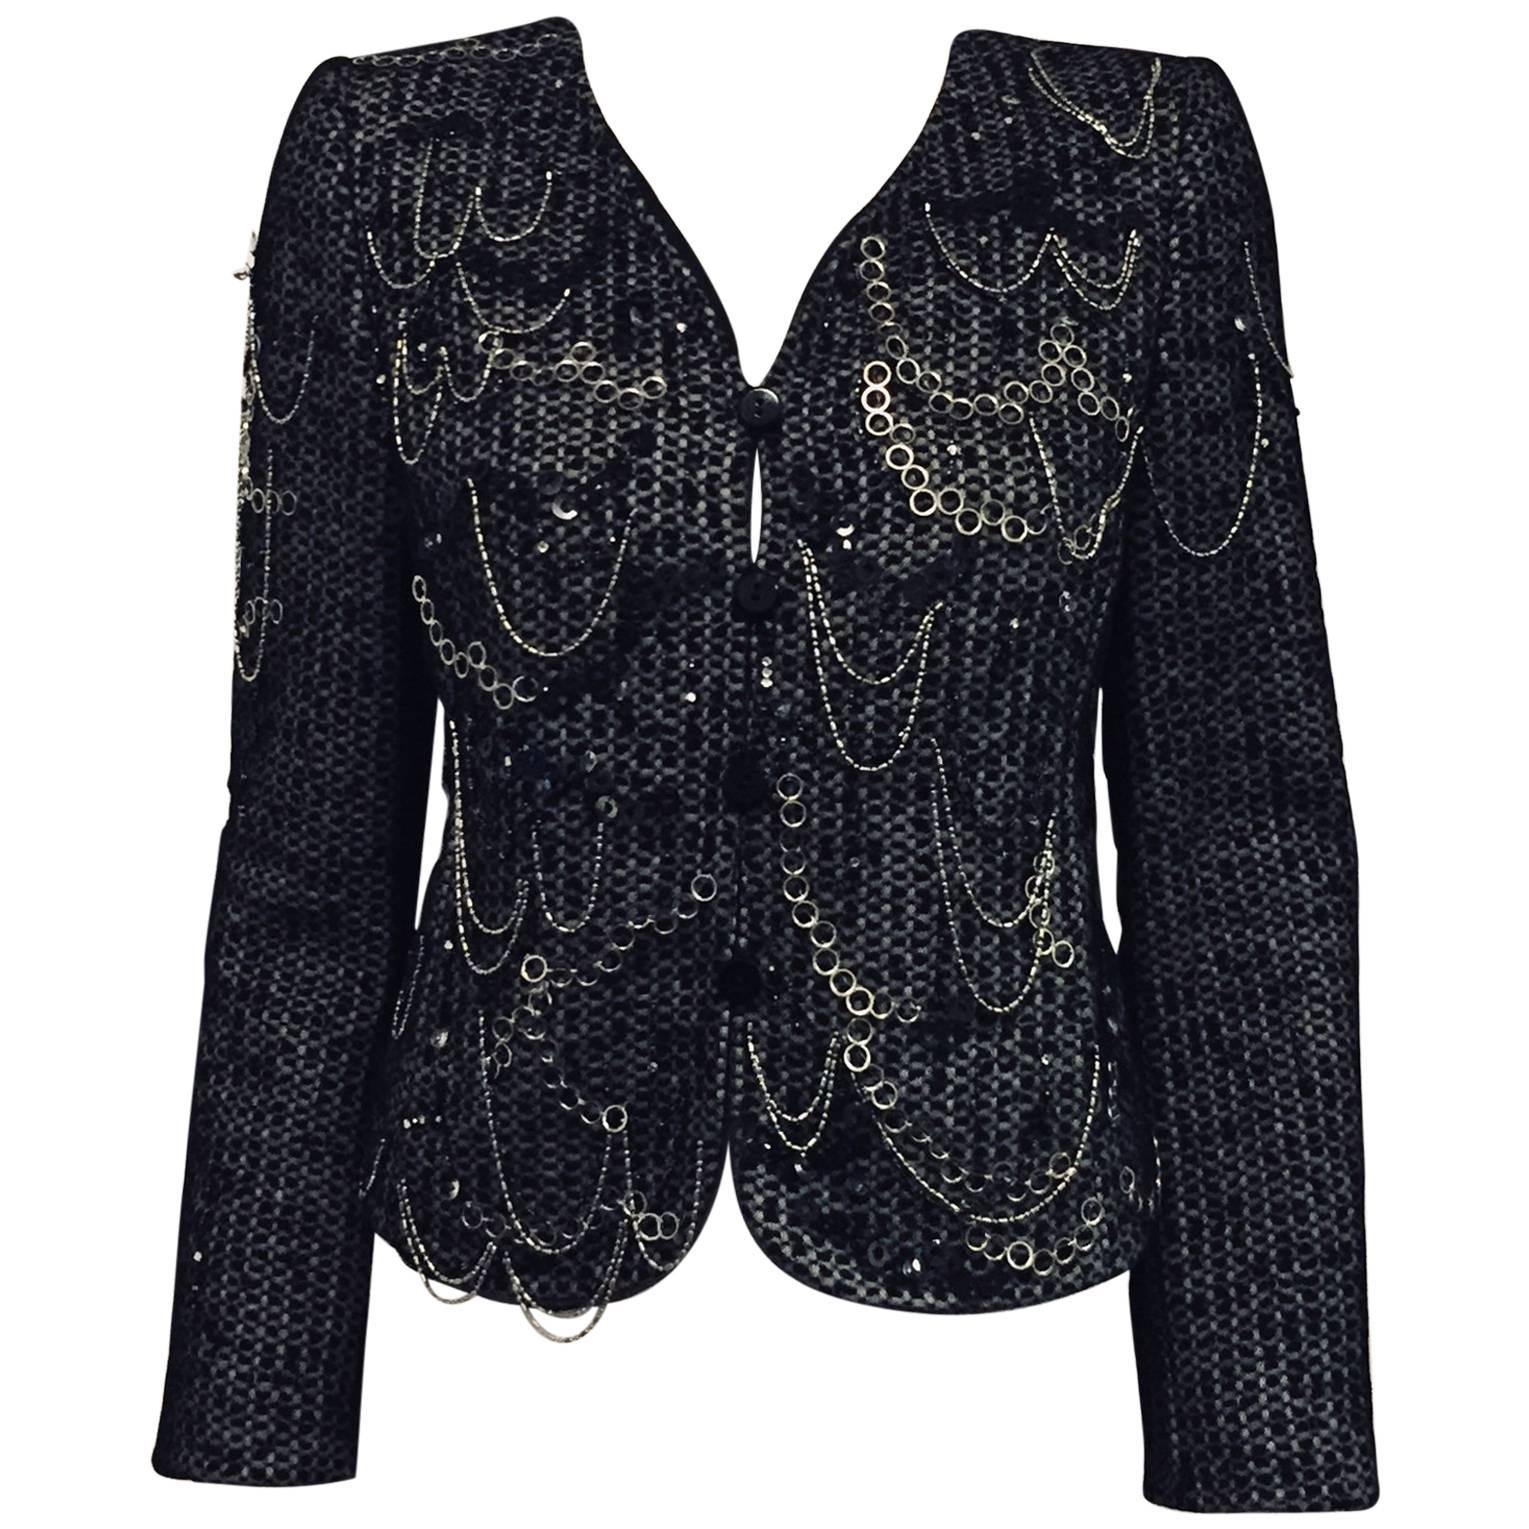 Amazing Armani Collezioni Bejeweled Black & Grey Tweed Jacket w/Beads & Sequins